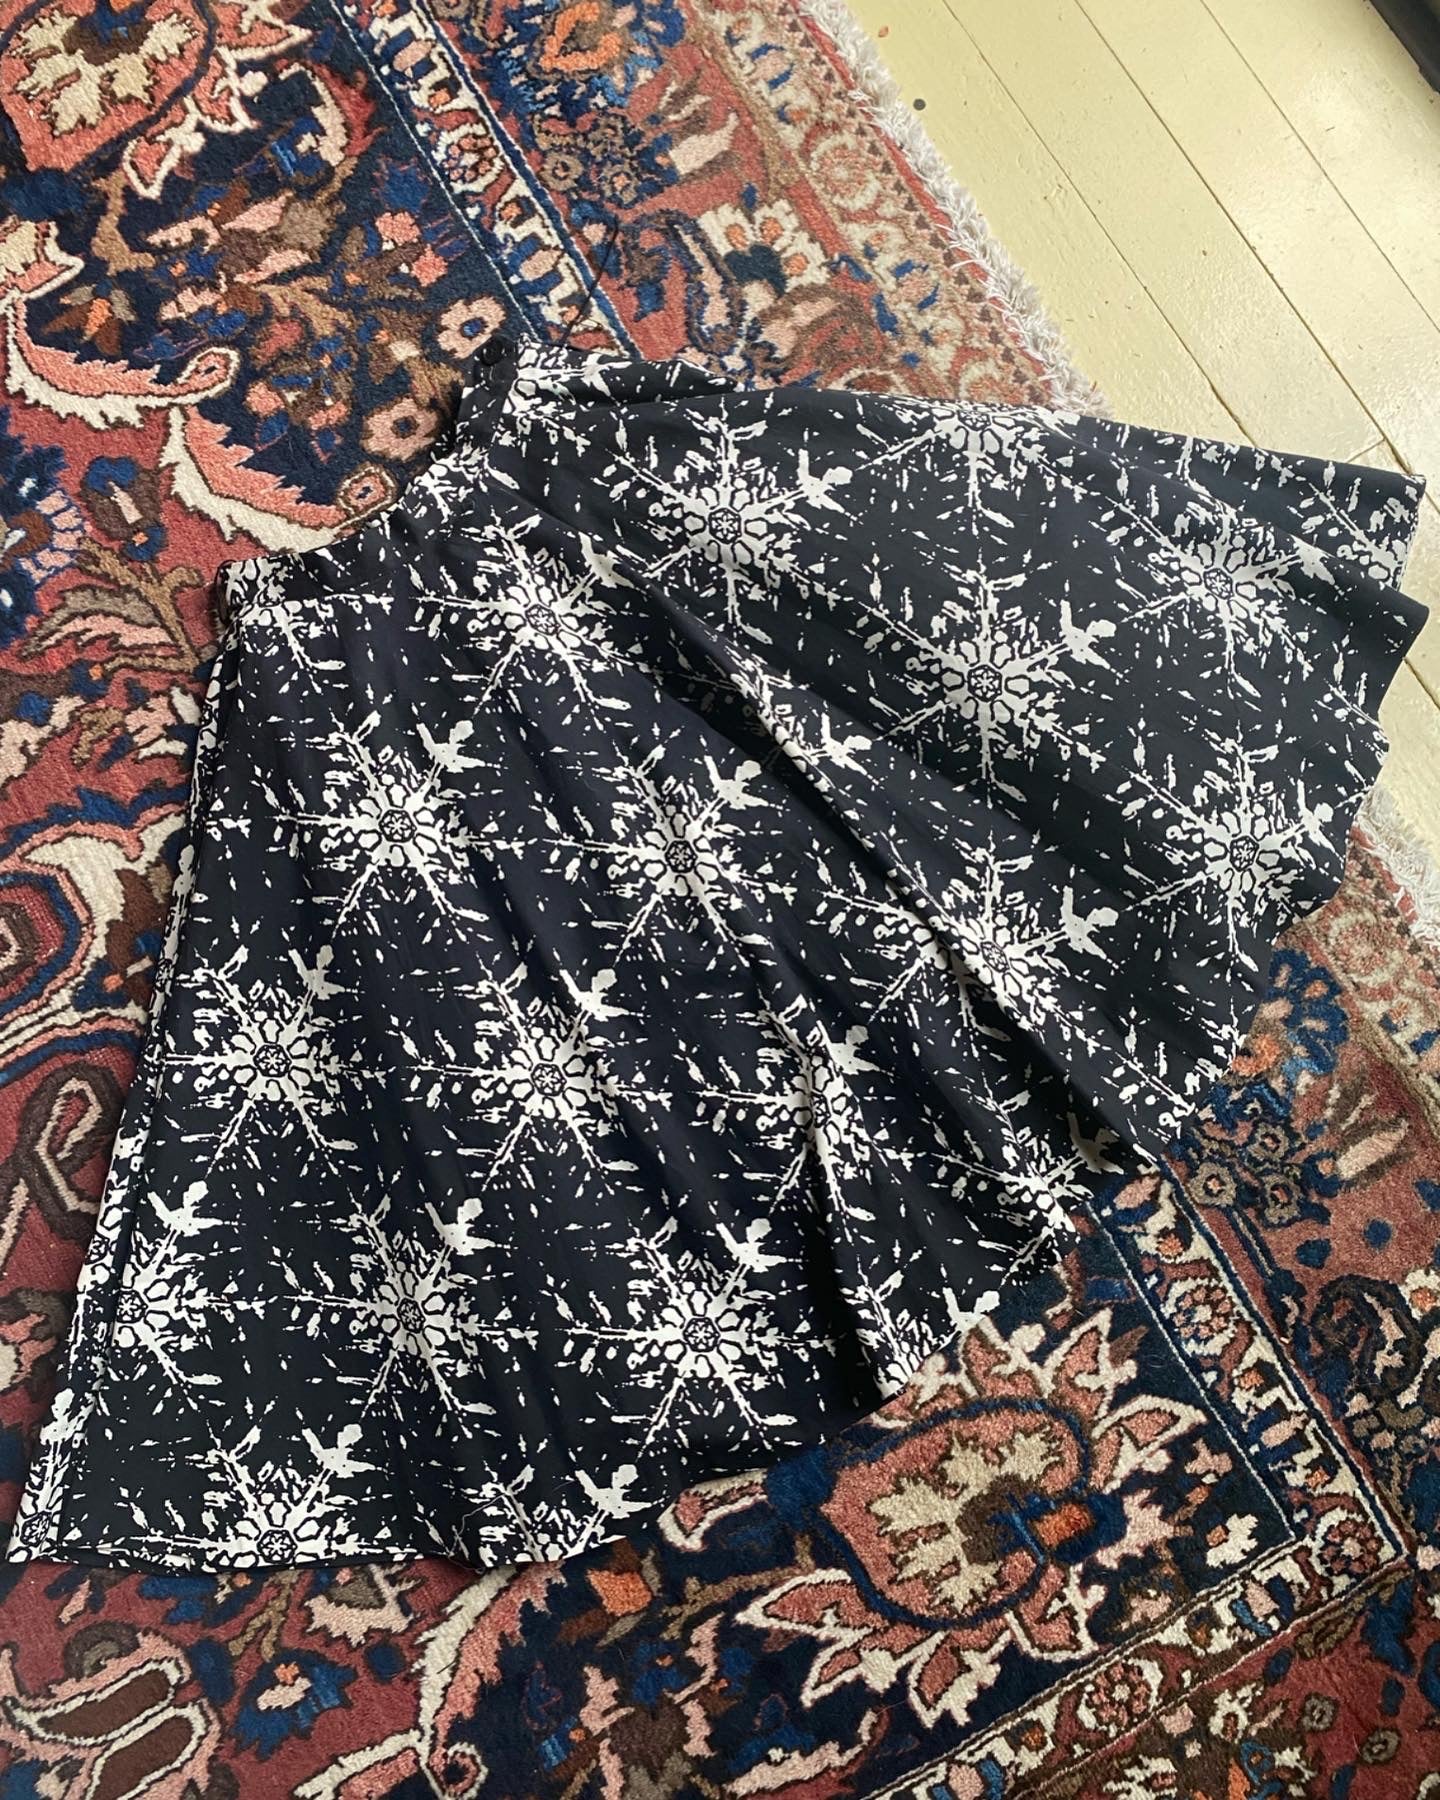 1950s Snowflake Cotton Circle Skirt